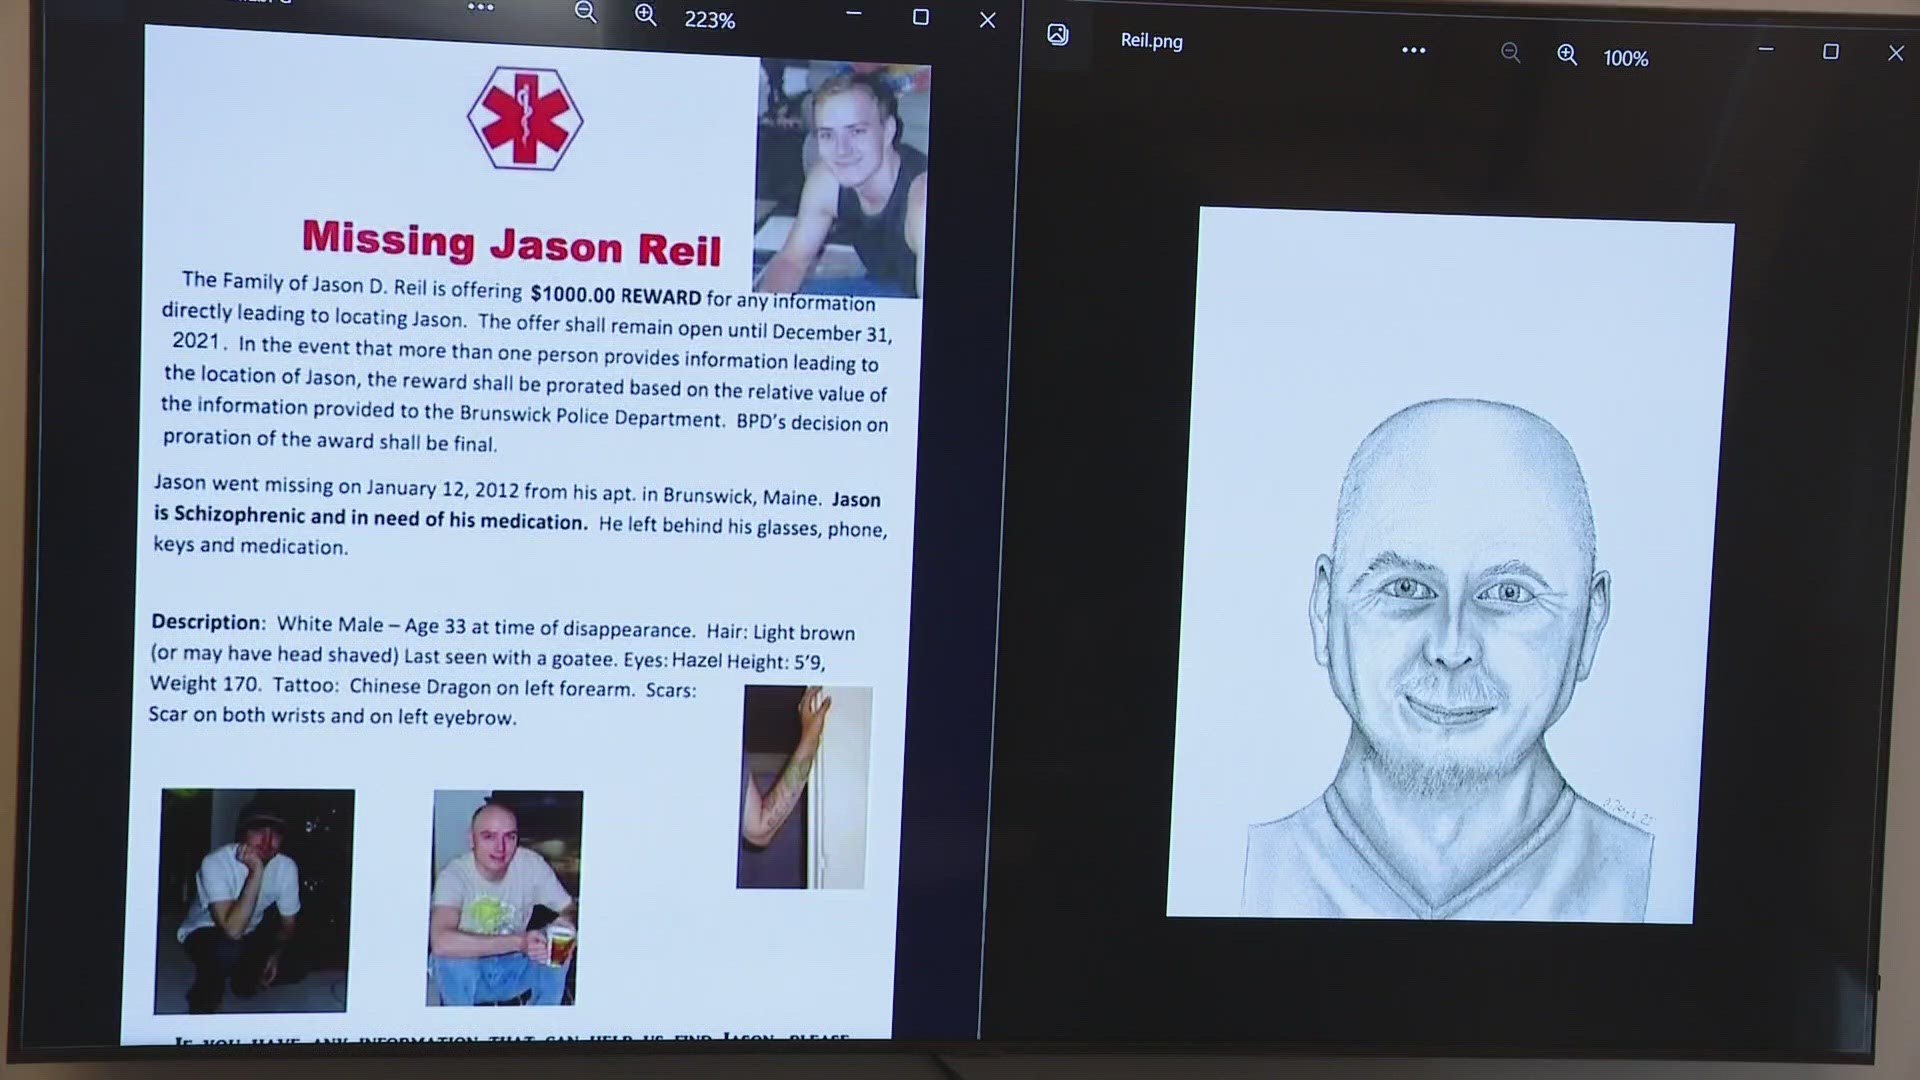 Jason Reil was last seen on surveillance footage picking up medication on Jan. 19, 2012.